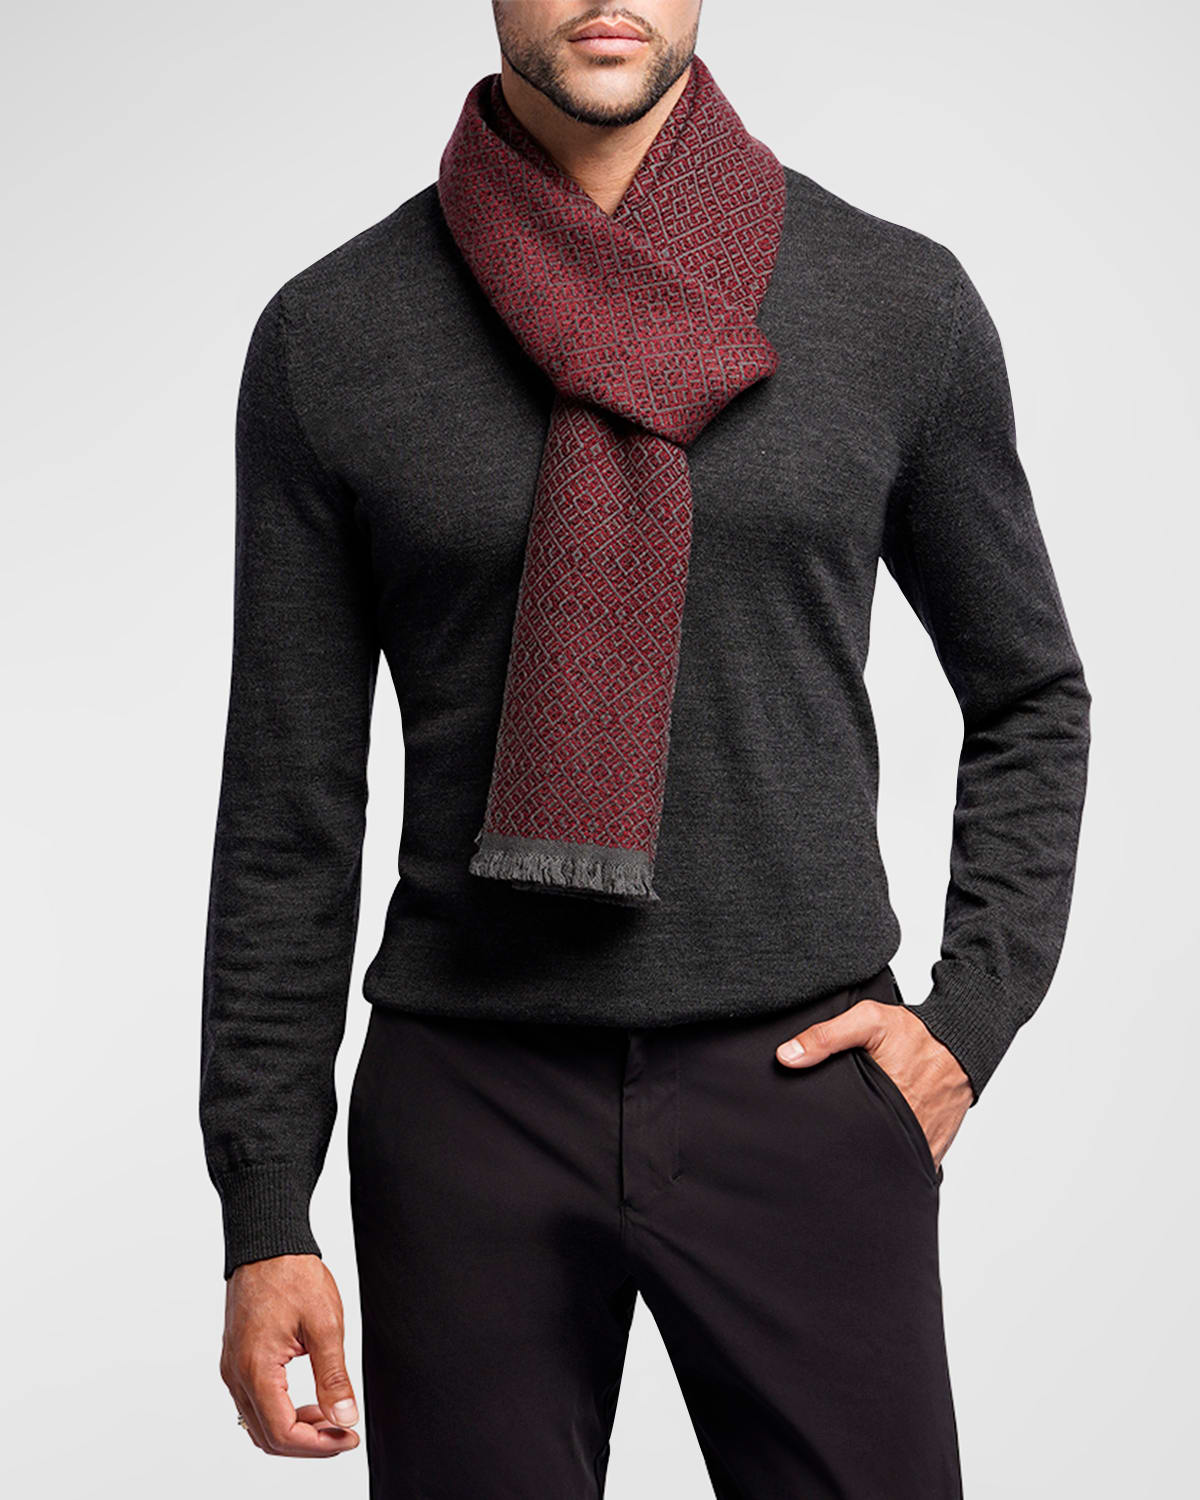 Men's Wool-Cashmere Geometric Jacquard Scarf